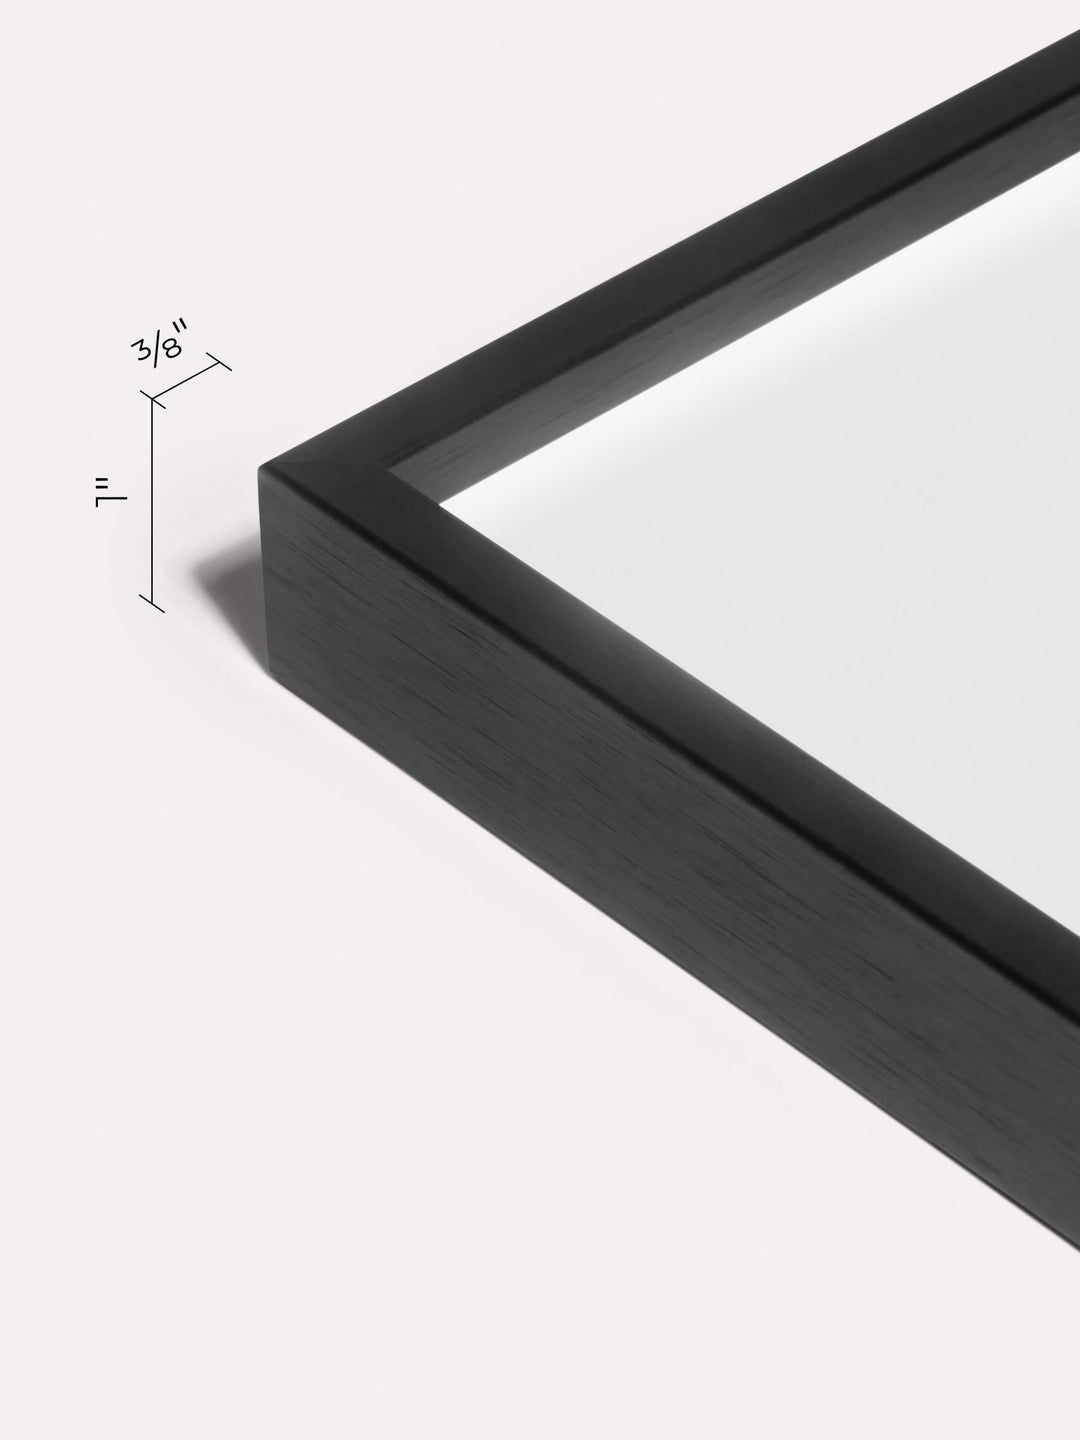 22x28-inch Thin Frame, Black - Close-up view